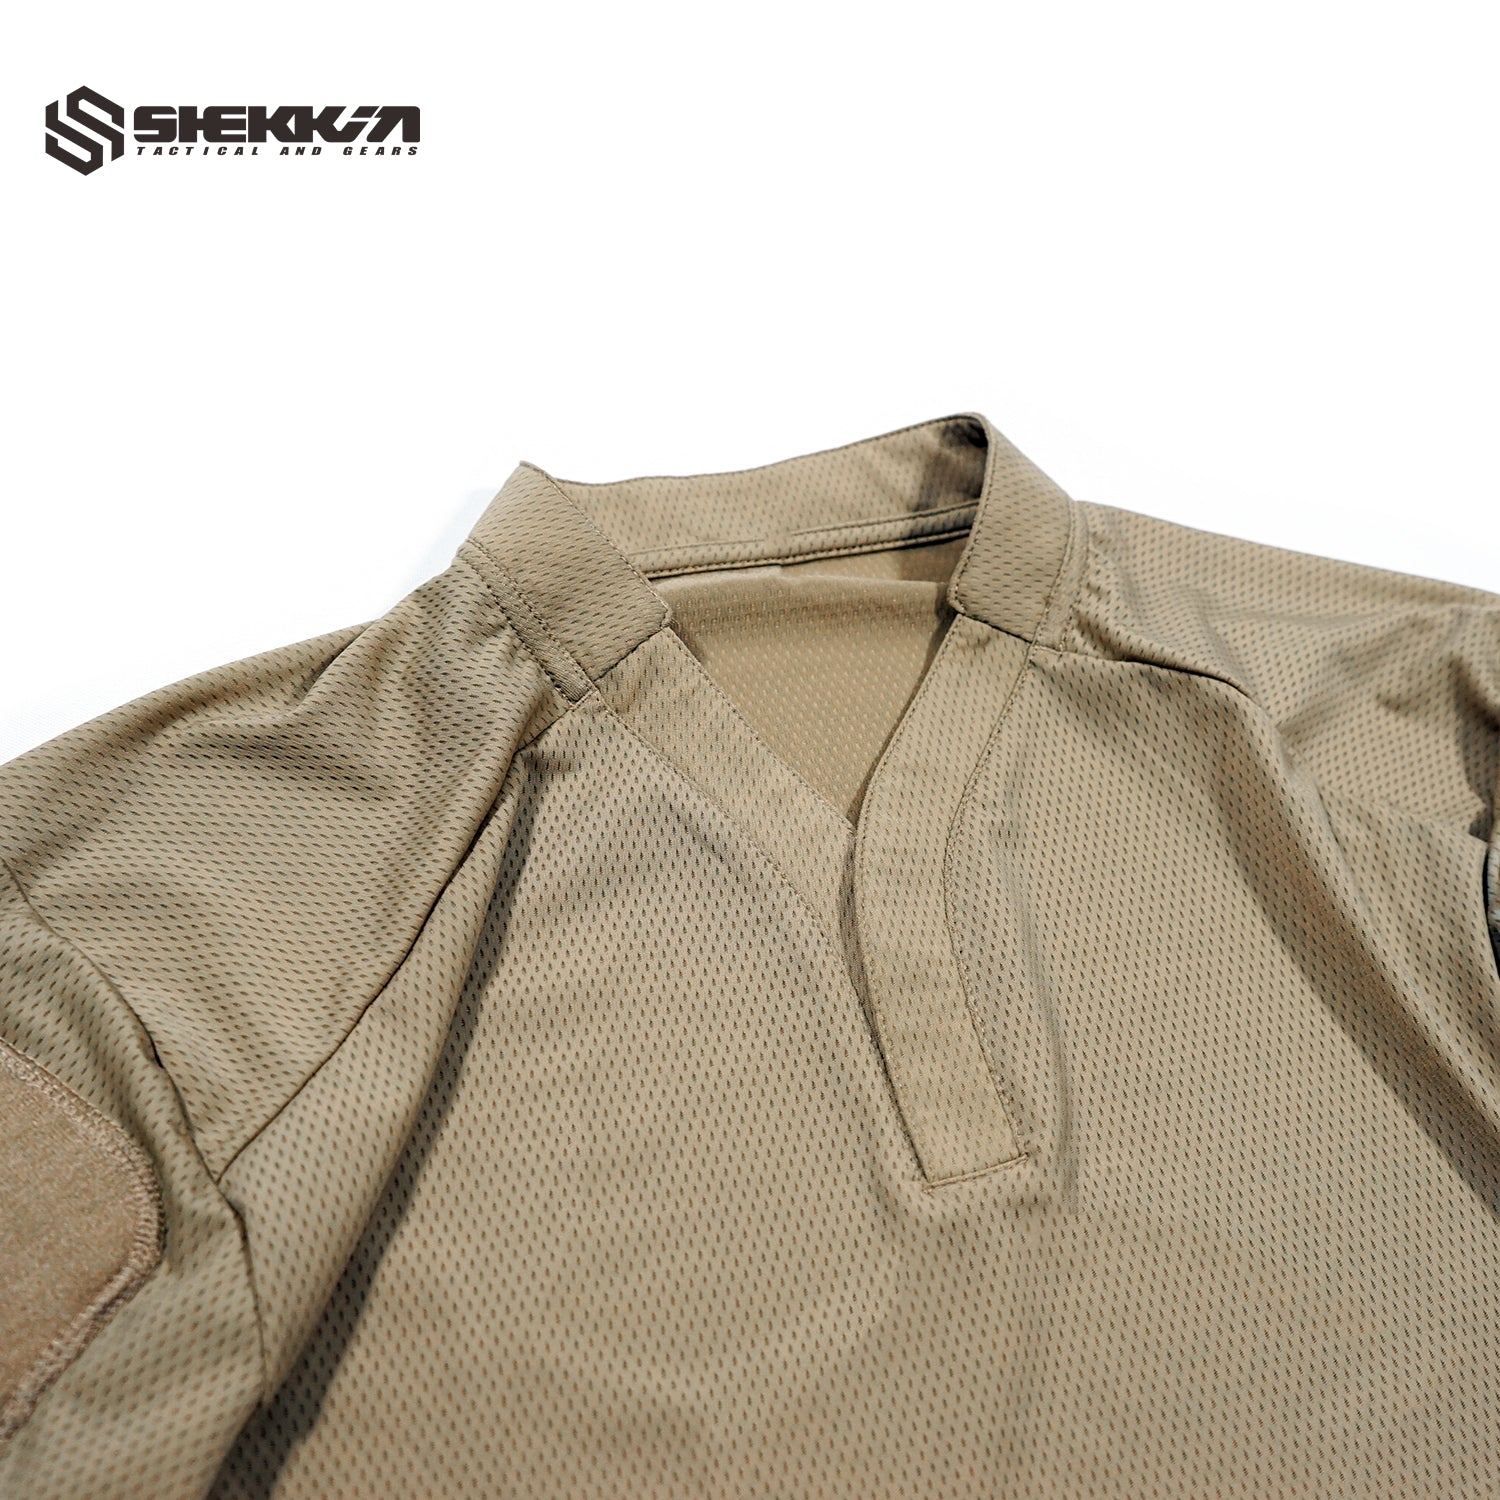 Velocity style BOSS Rugby Shirt long sleeves - Shekkin Gears